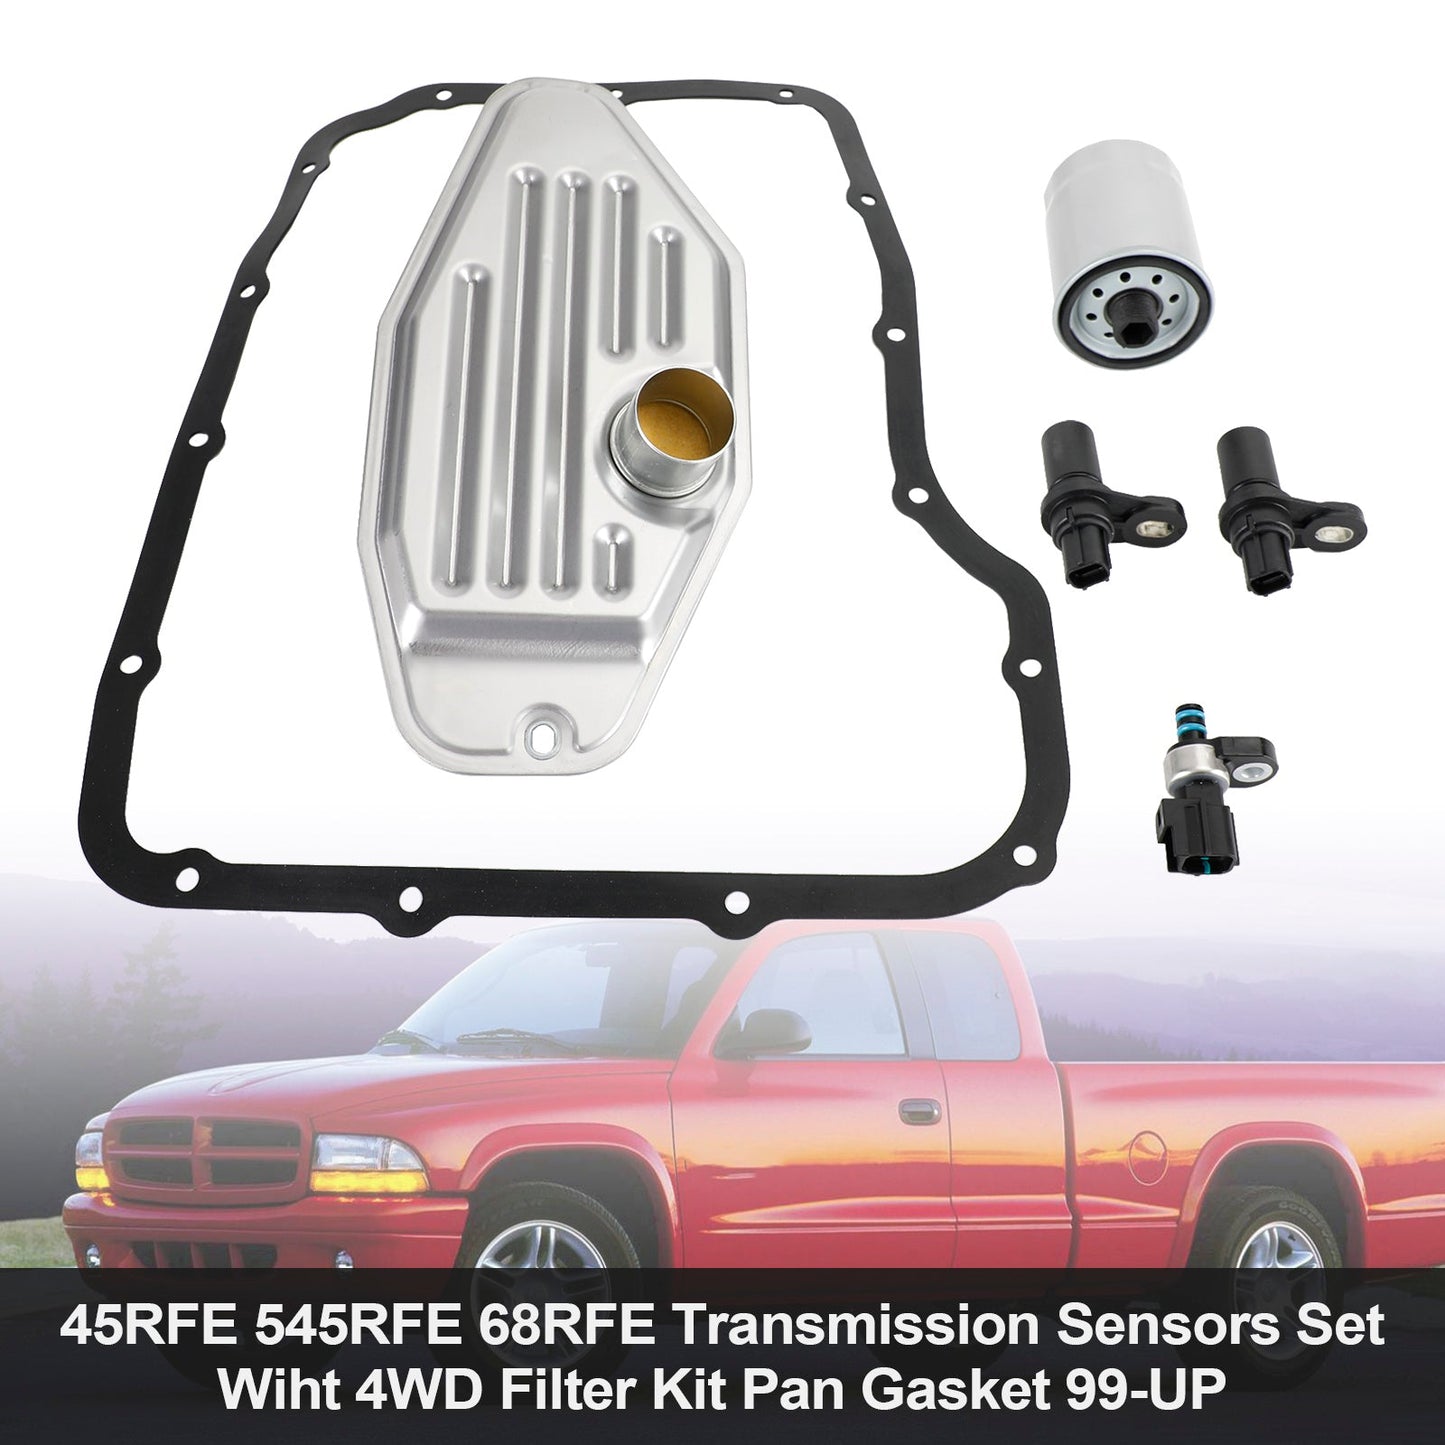 45RFE 545RFE 68RFE Transmission Sensors Set With 4WD Filter Kit Pan Gasket 99-UP